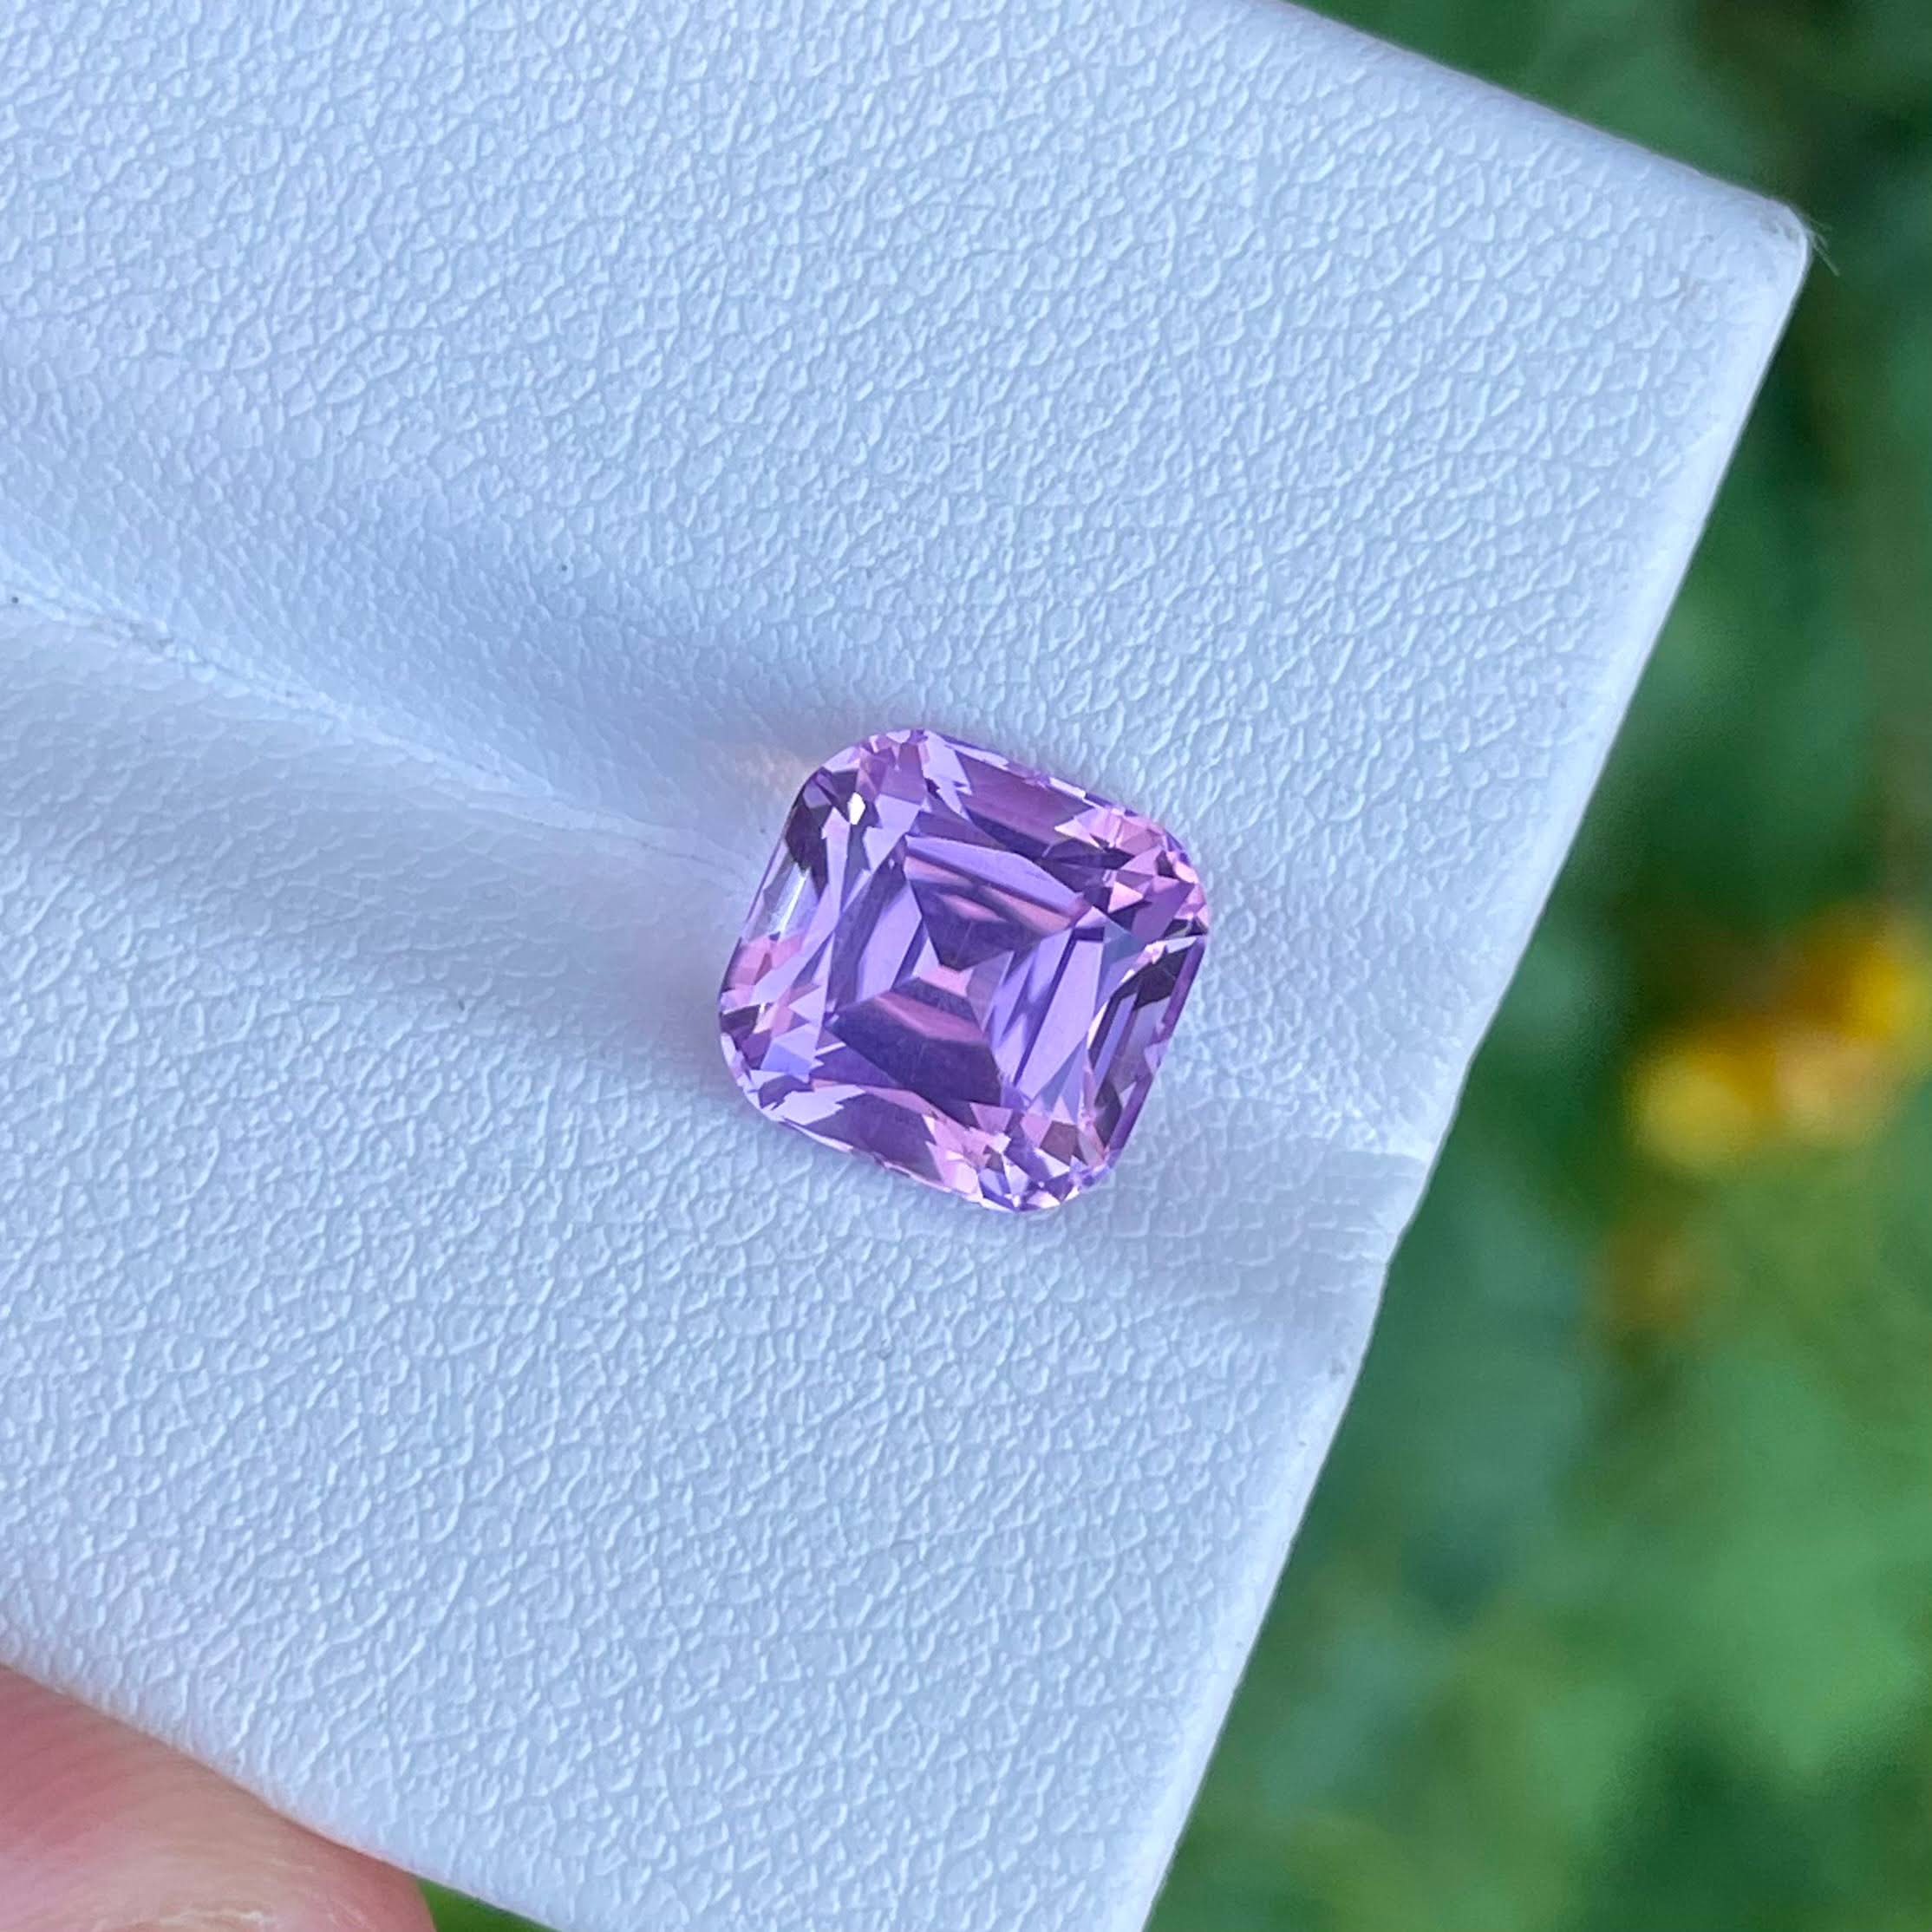 Purple Kunzite 4.10 carat Cushion Cut